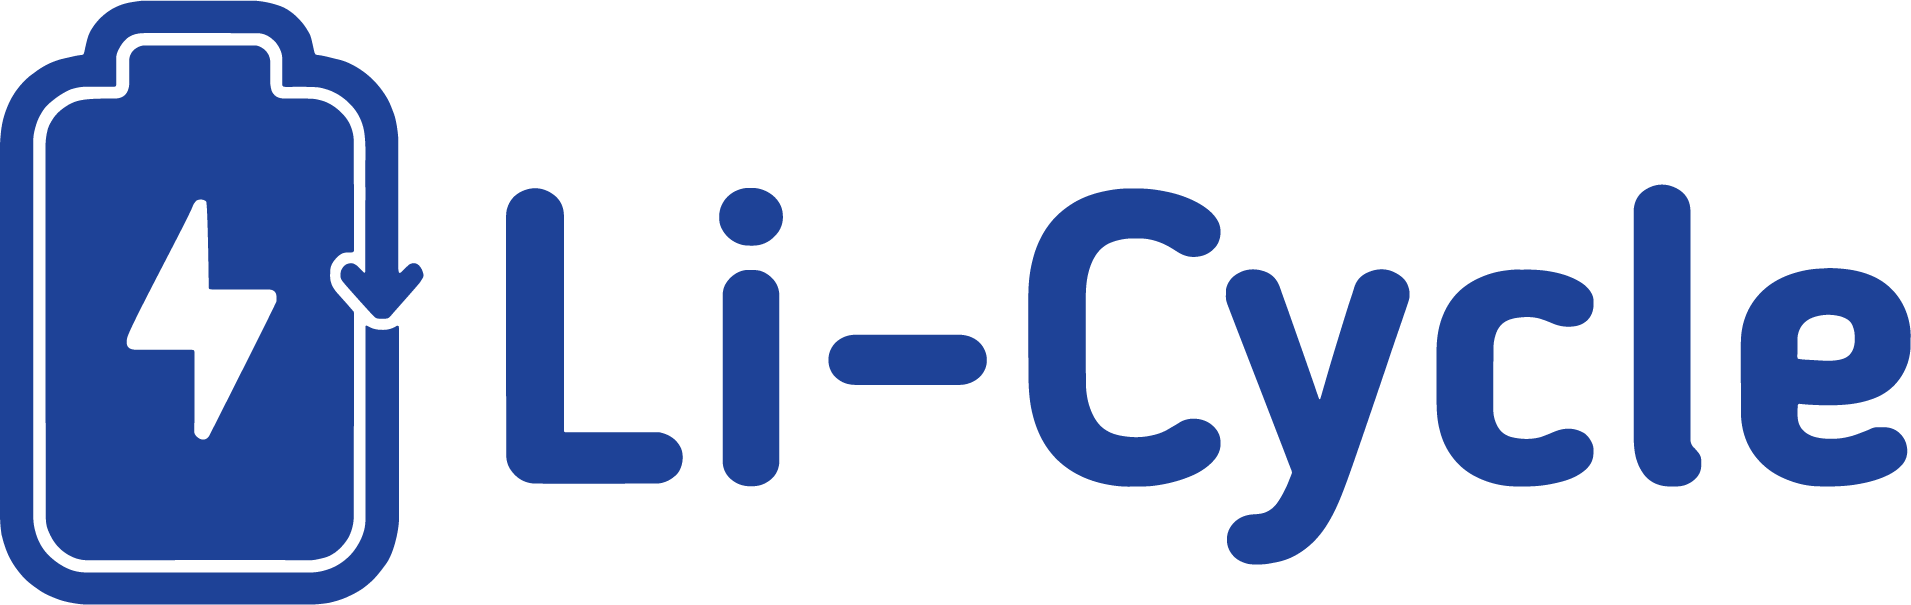 Li-Cycle logo in blue